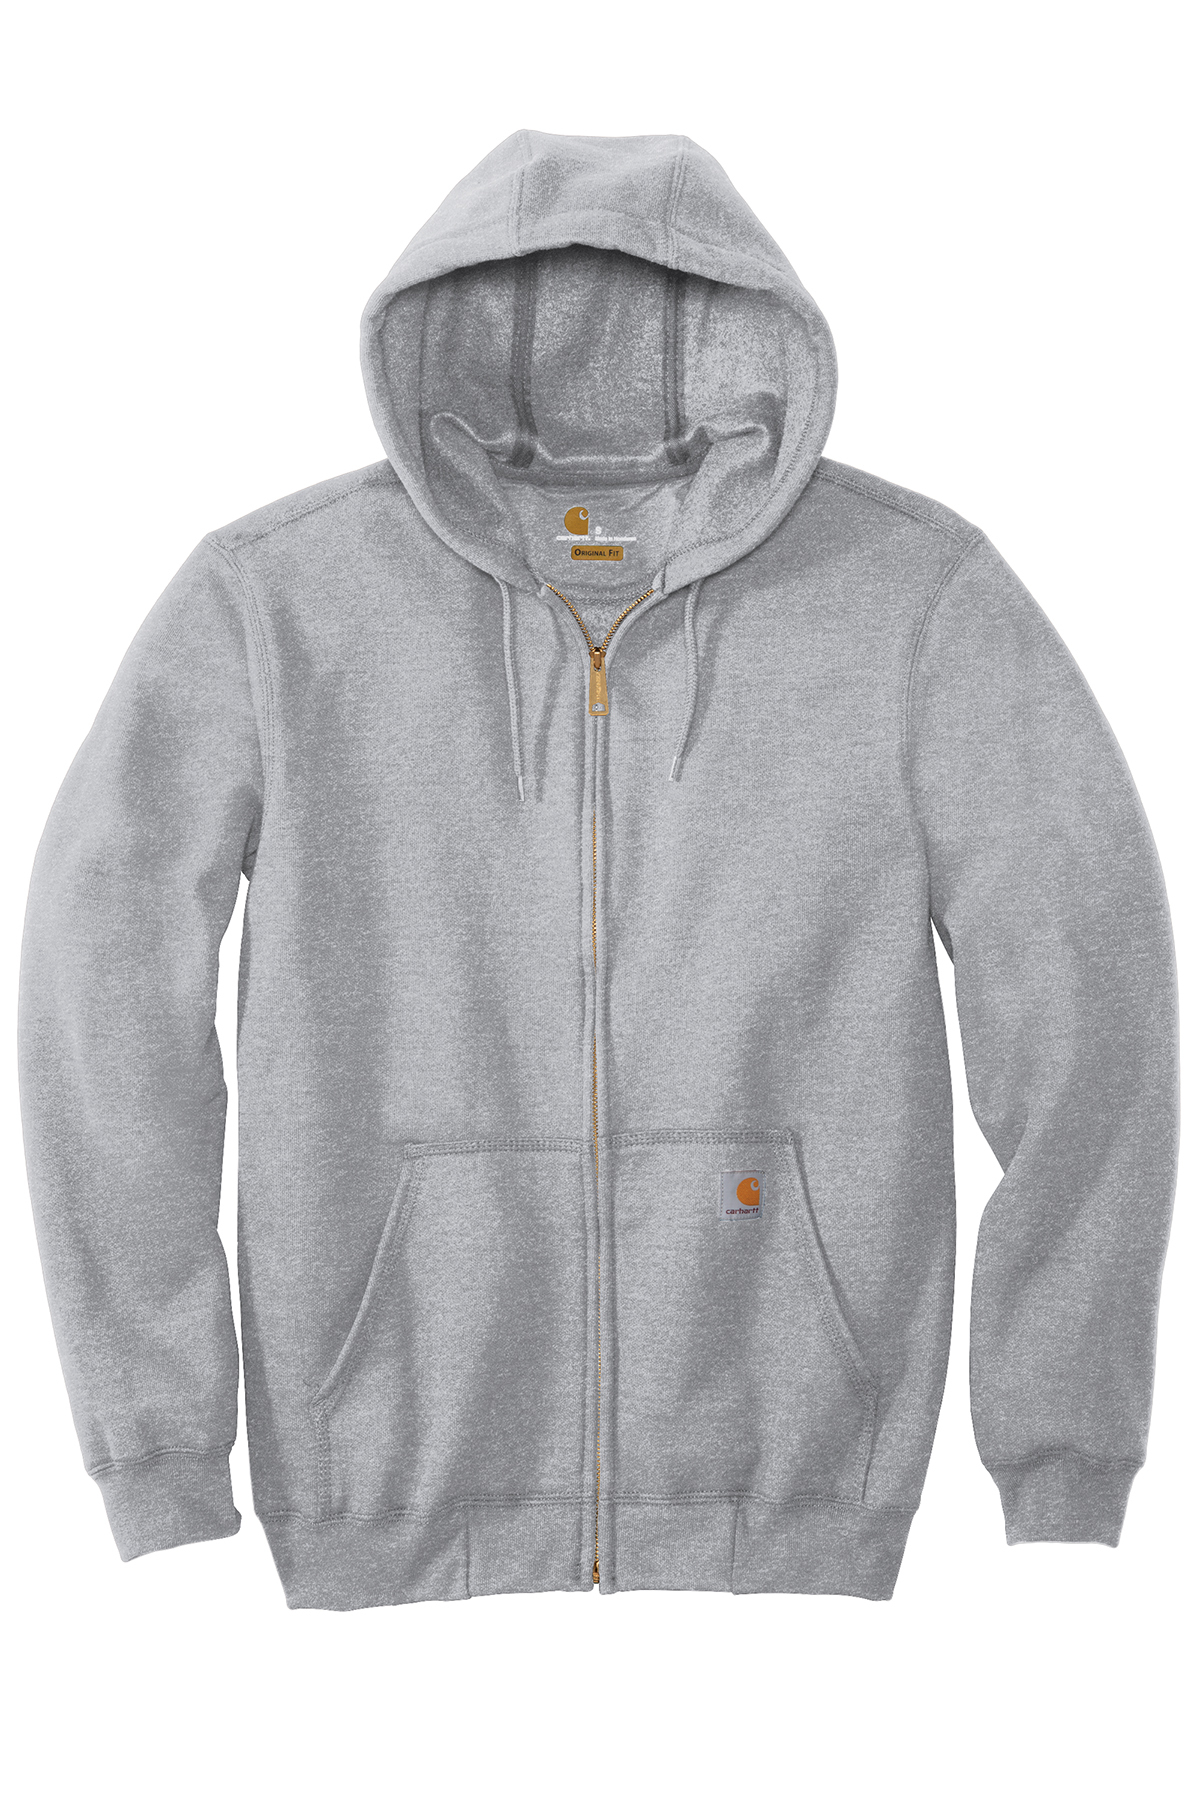 Carhartt Midweight Hooded Zip-Front Sweatshirt, Product